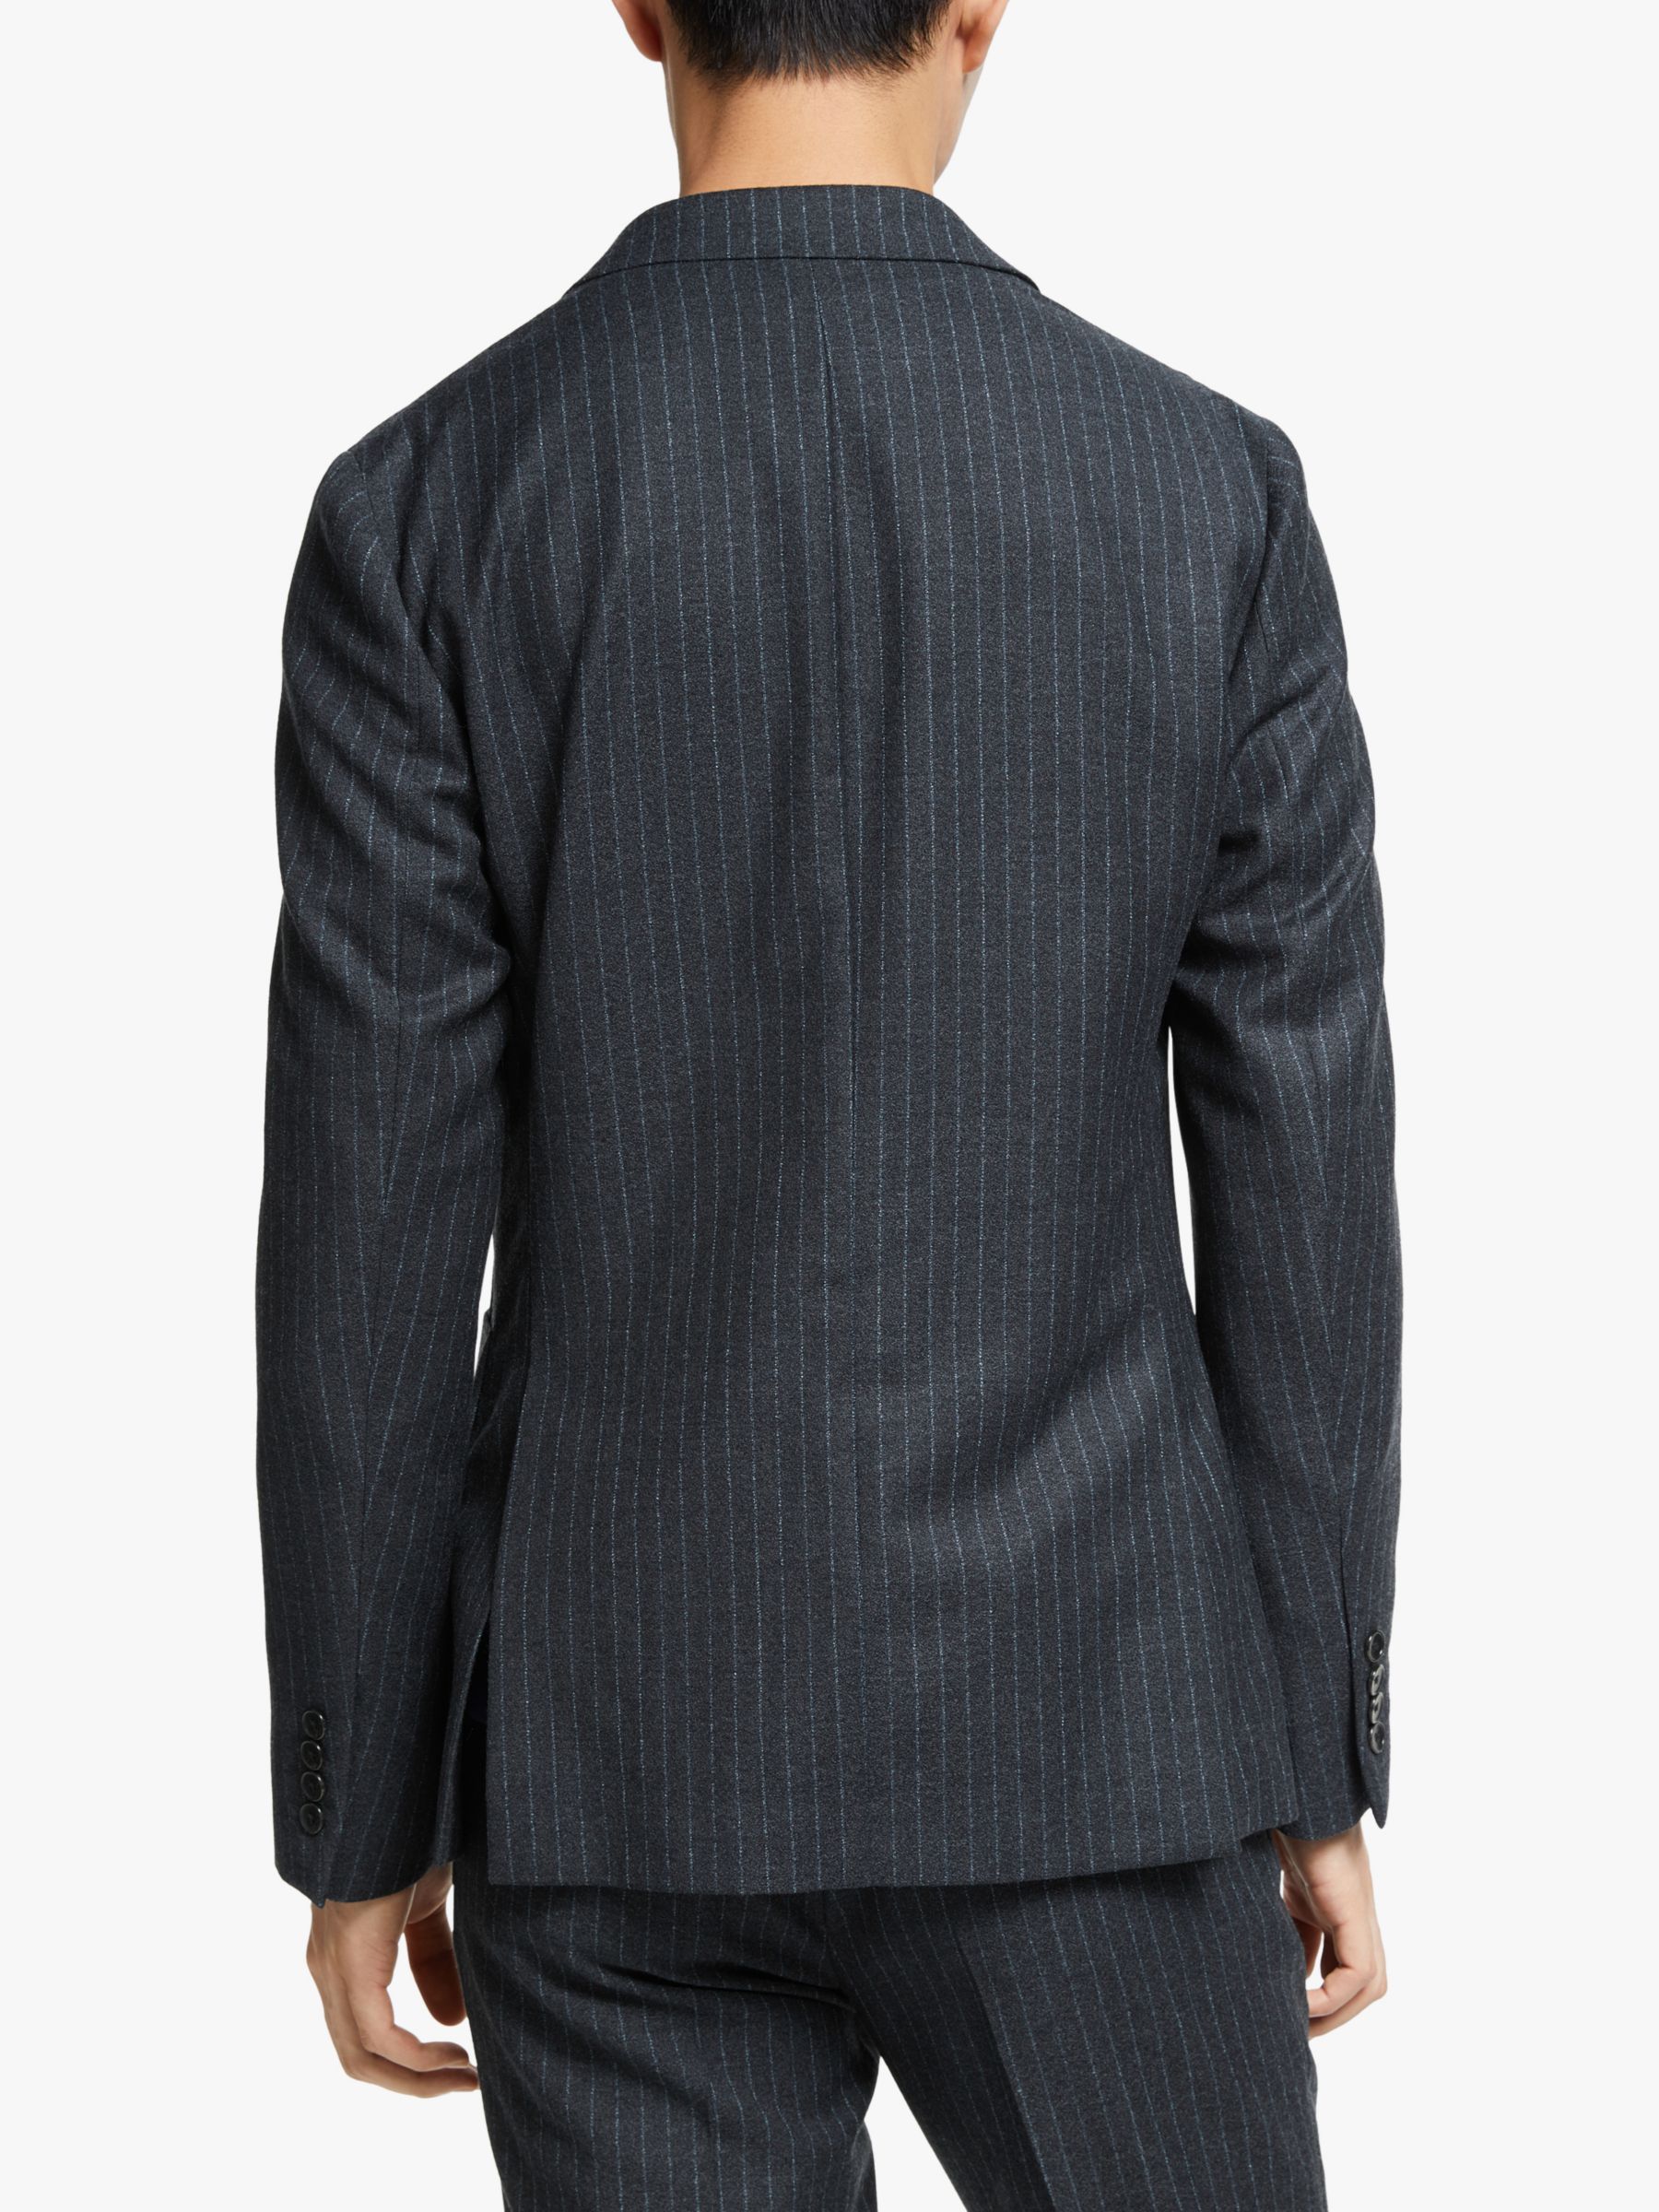 Kin Decon Stripe Suit Jacket, Grey at John Lewis & Partners